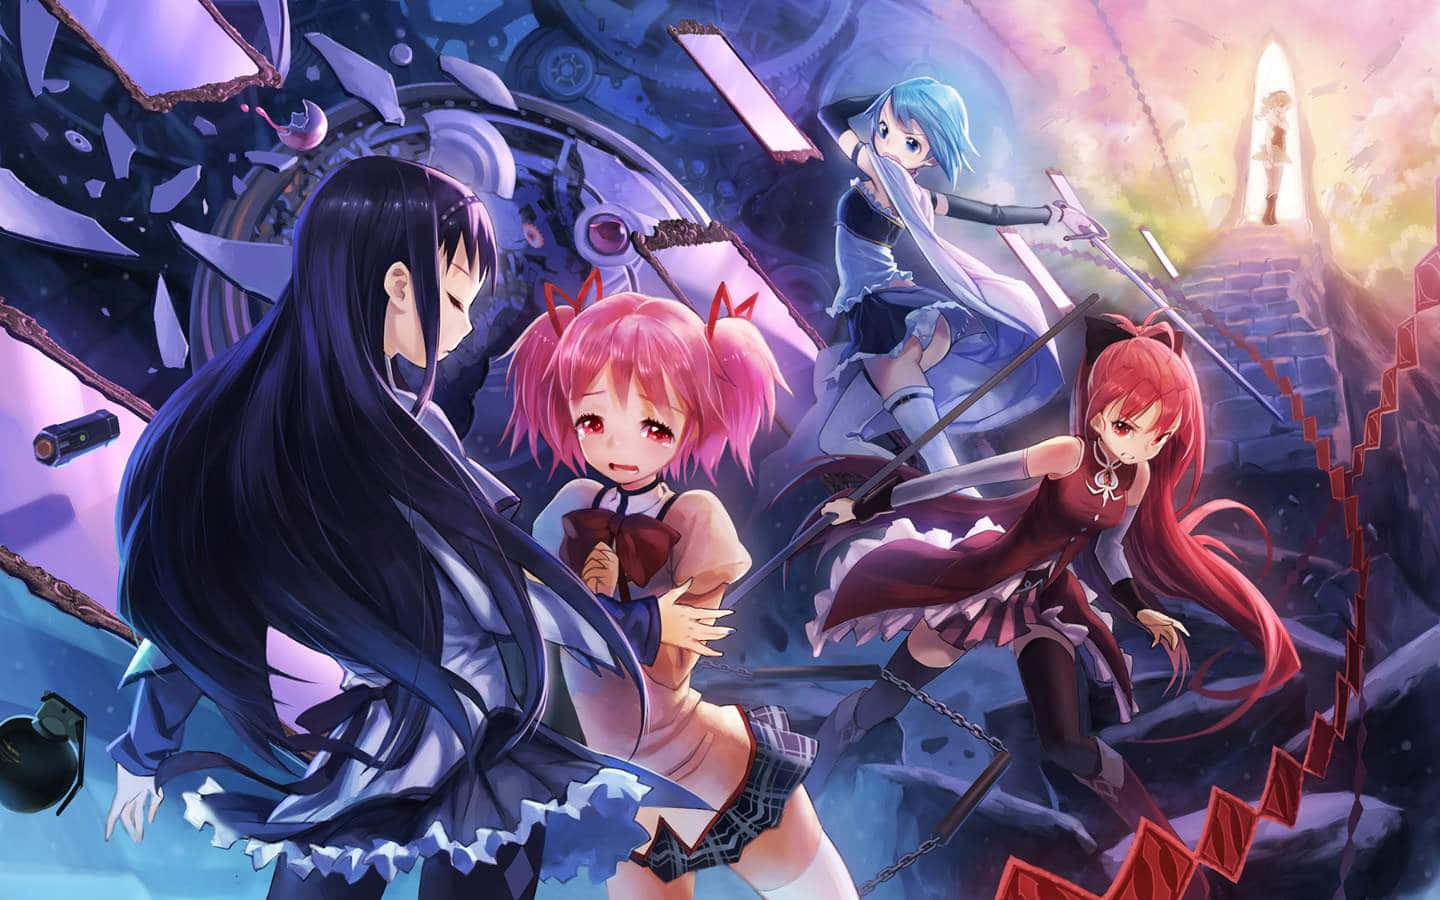 Ungrupo De Chicas Anime Paradas En Una Habitación Oscura. Fondo de pantalla